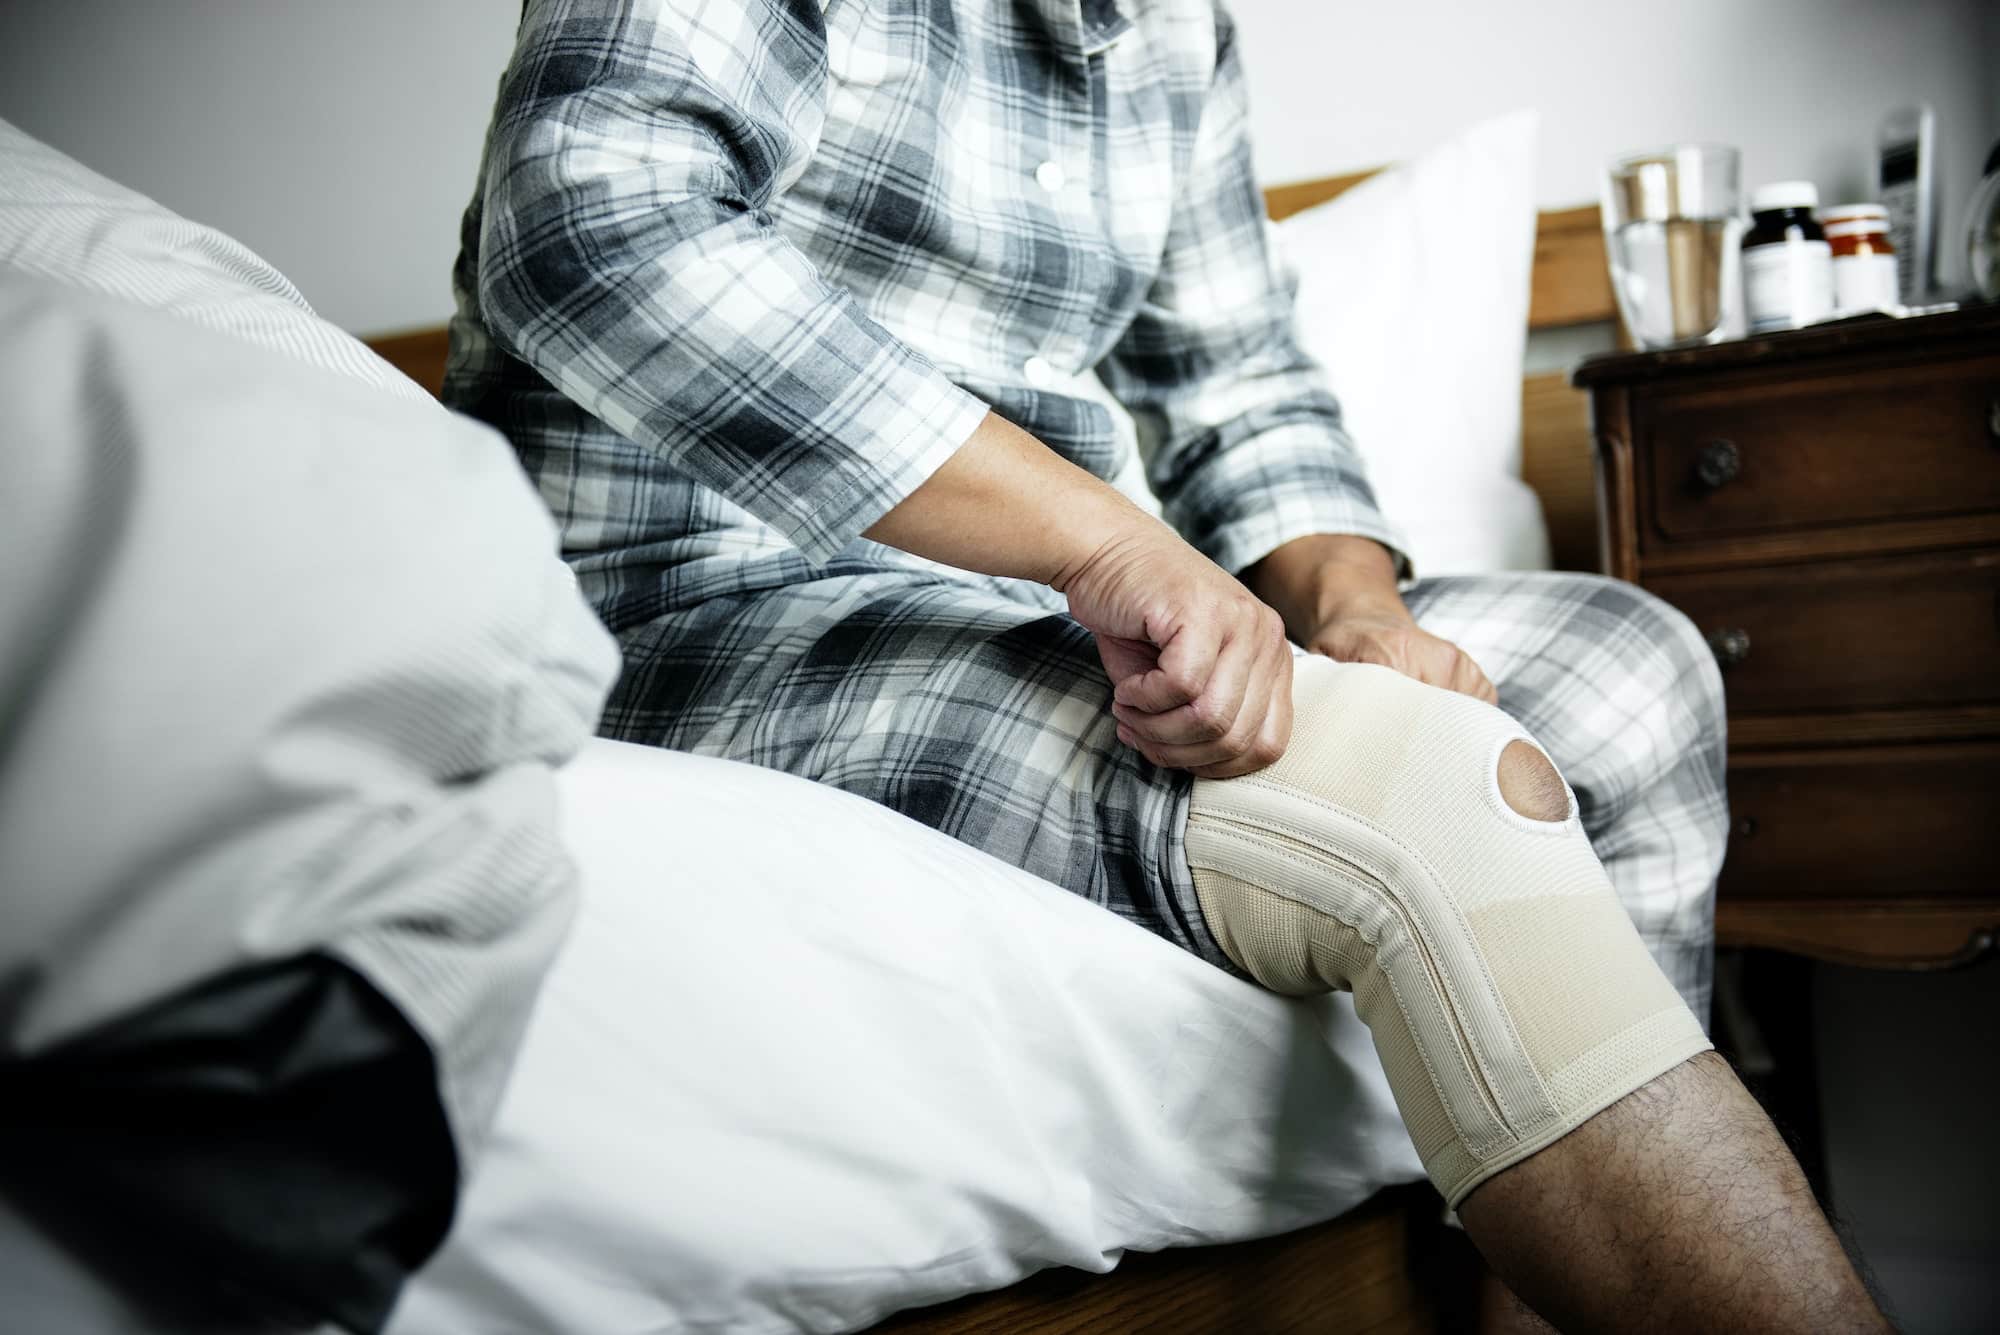 A man having a knee injury